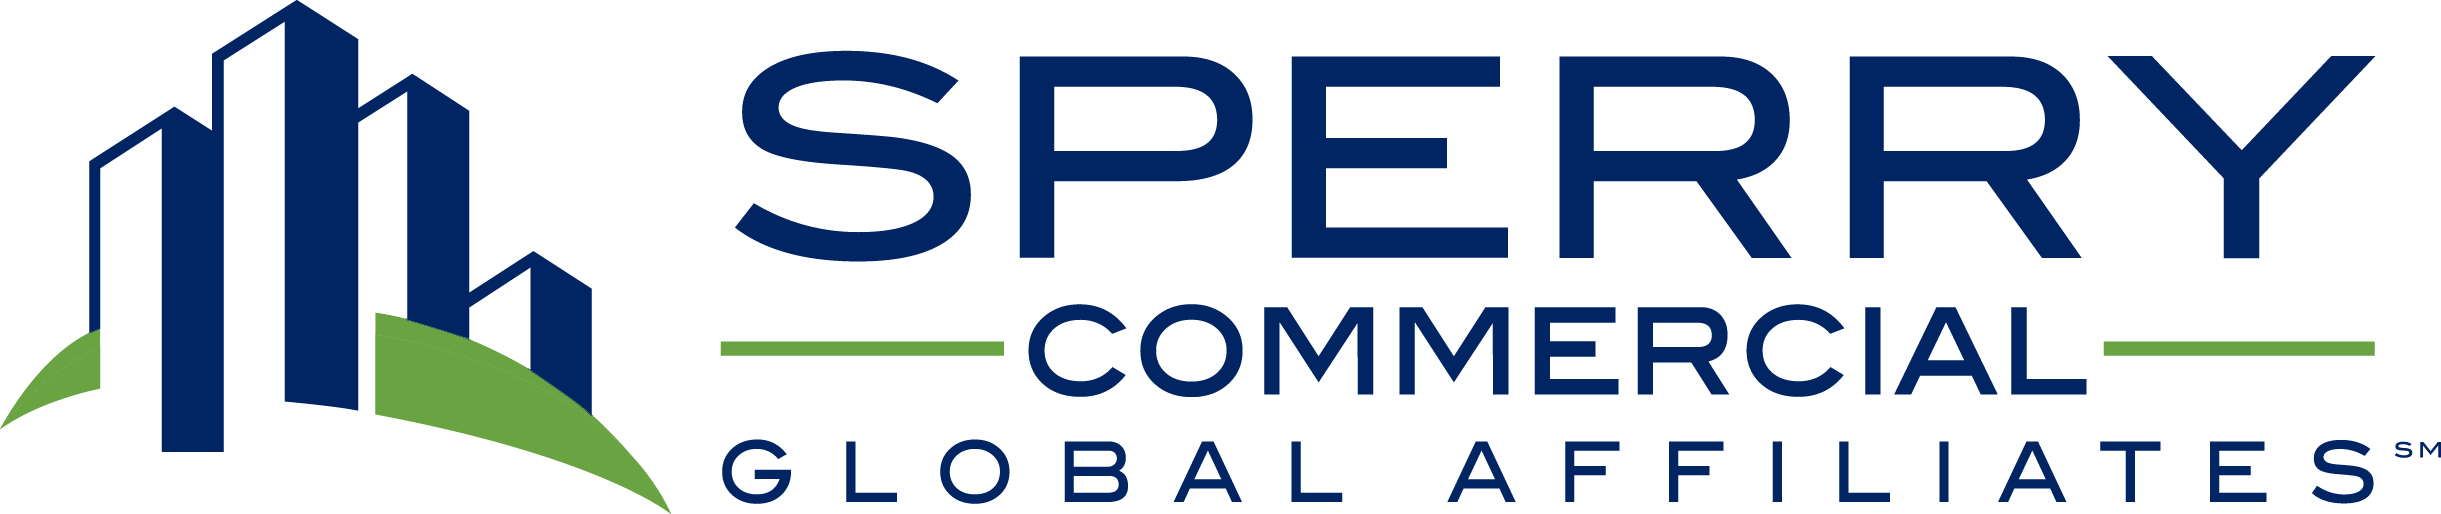 Sperry-Alt-Logo.png